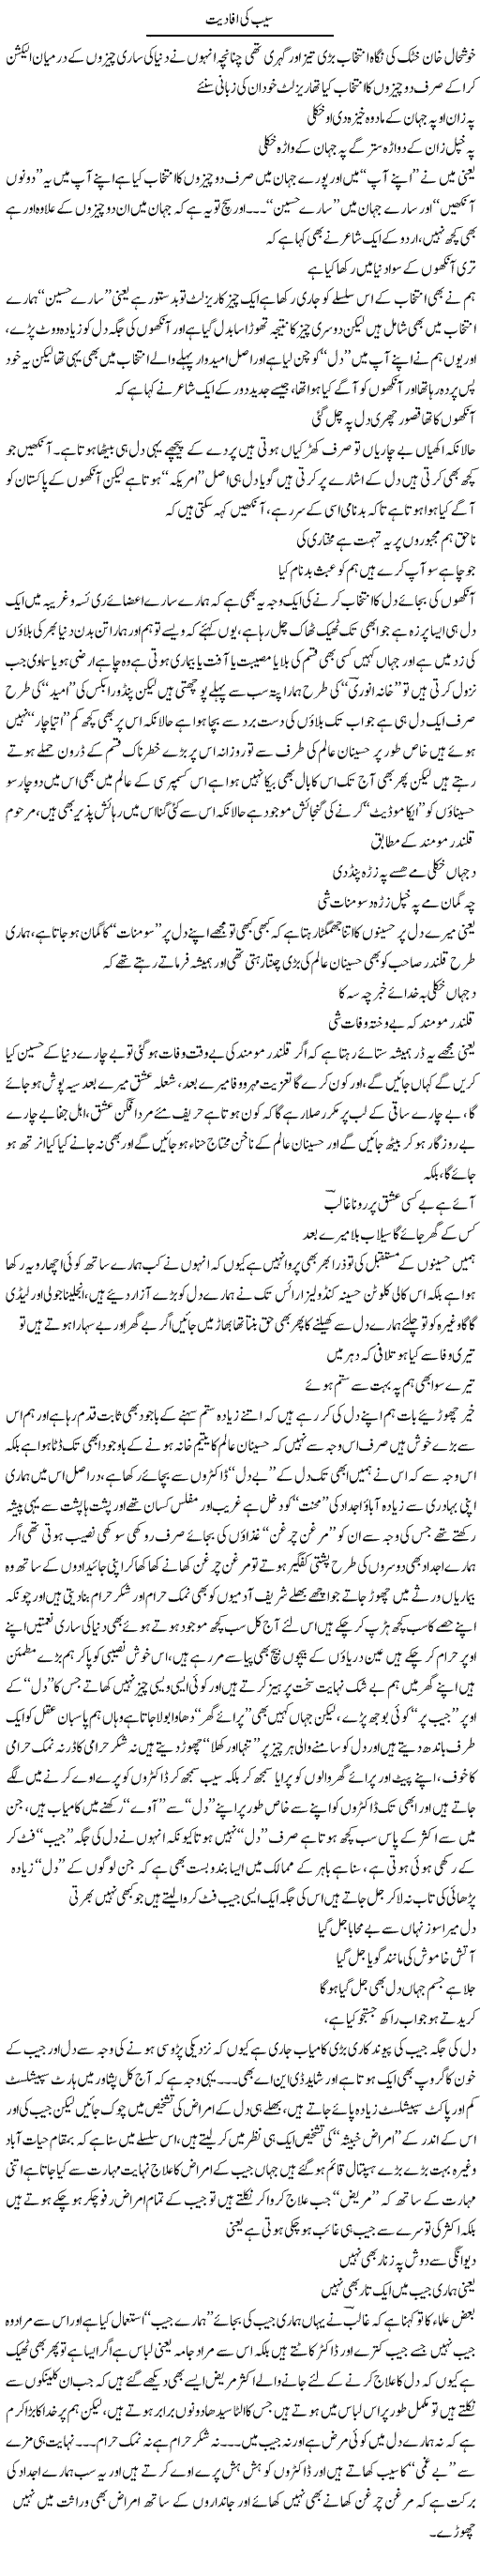 Saib Ki Afadiyat | Saad Ullah Jan Barq | Daily Urdu Columns